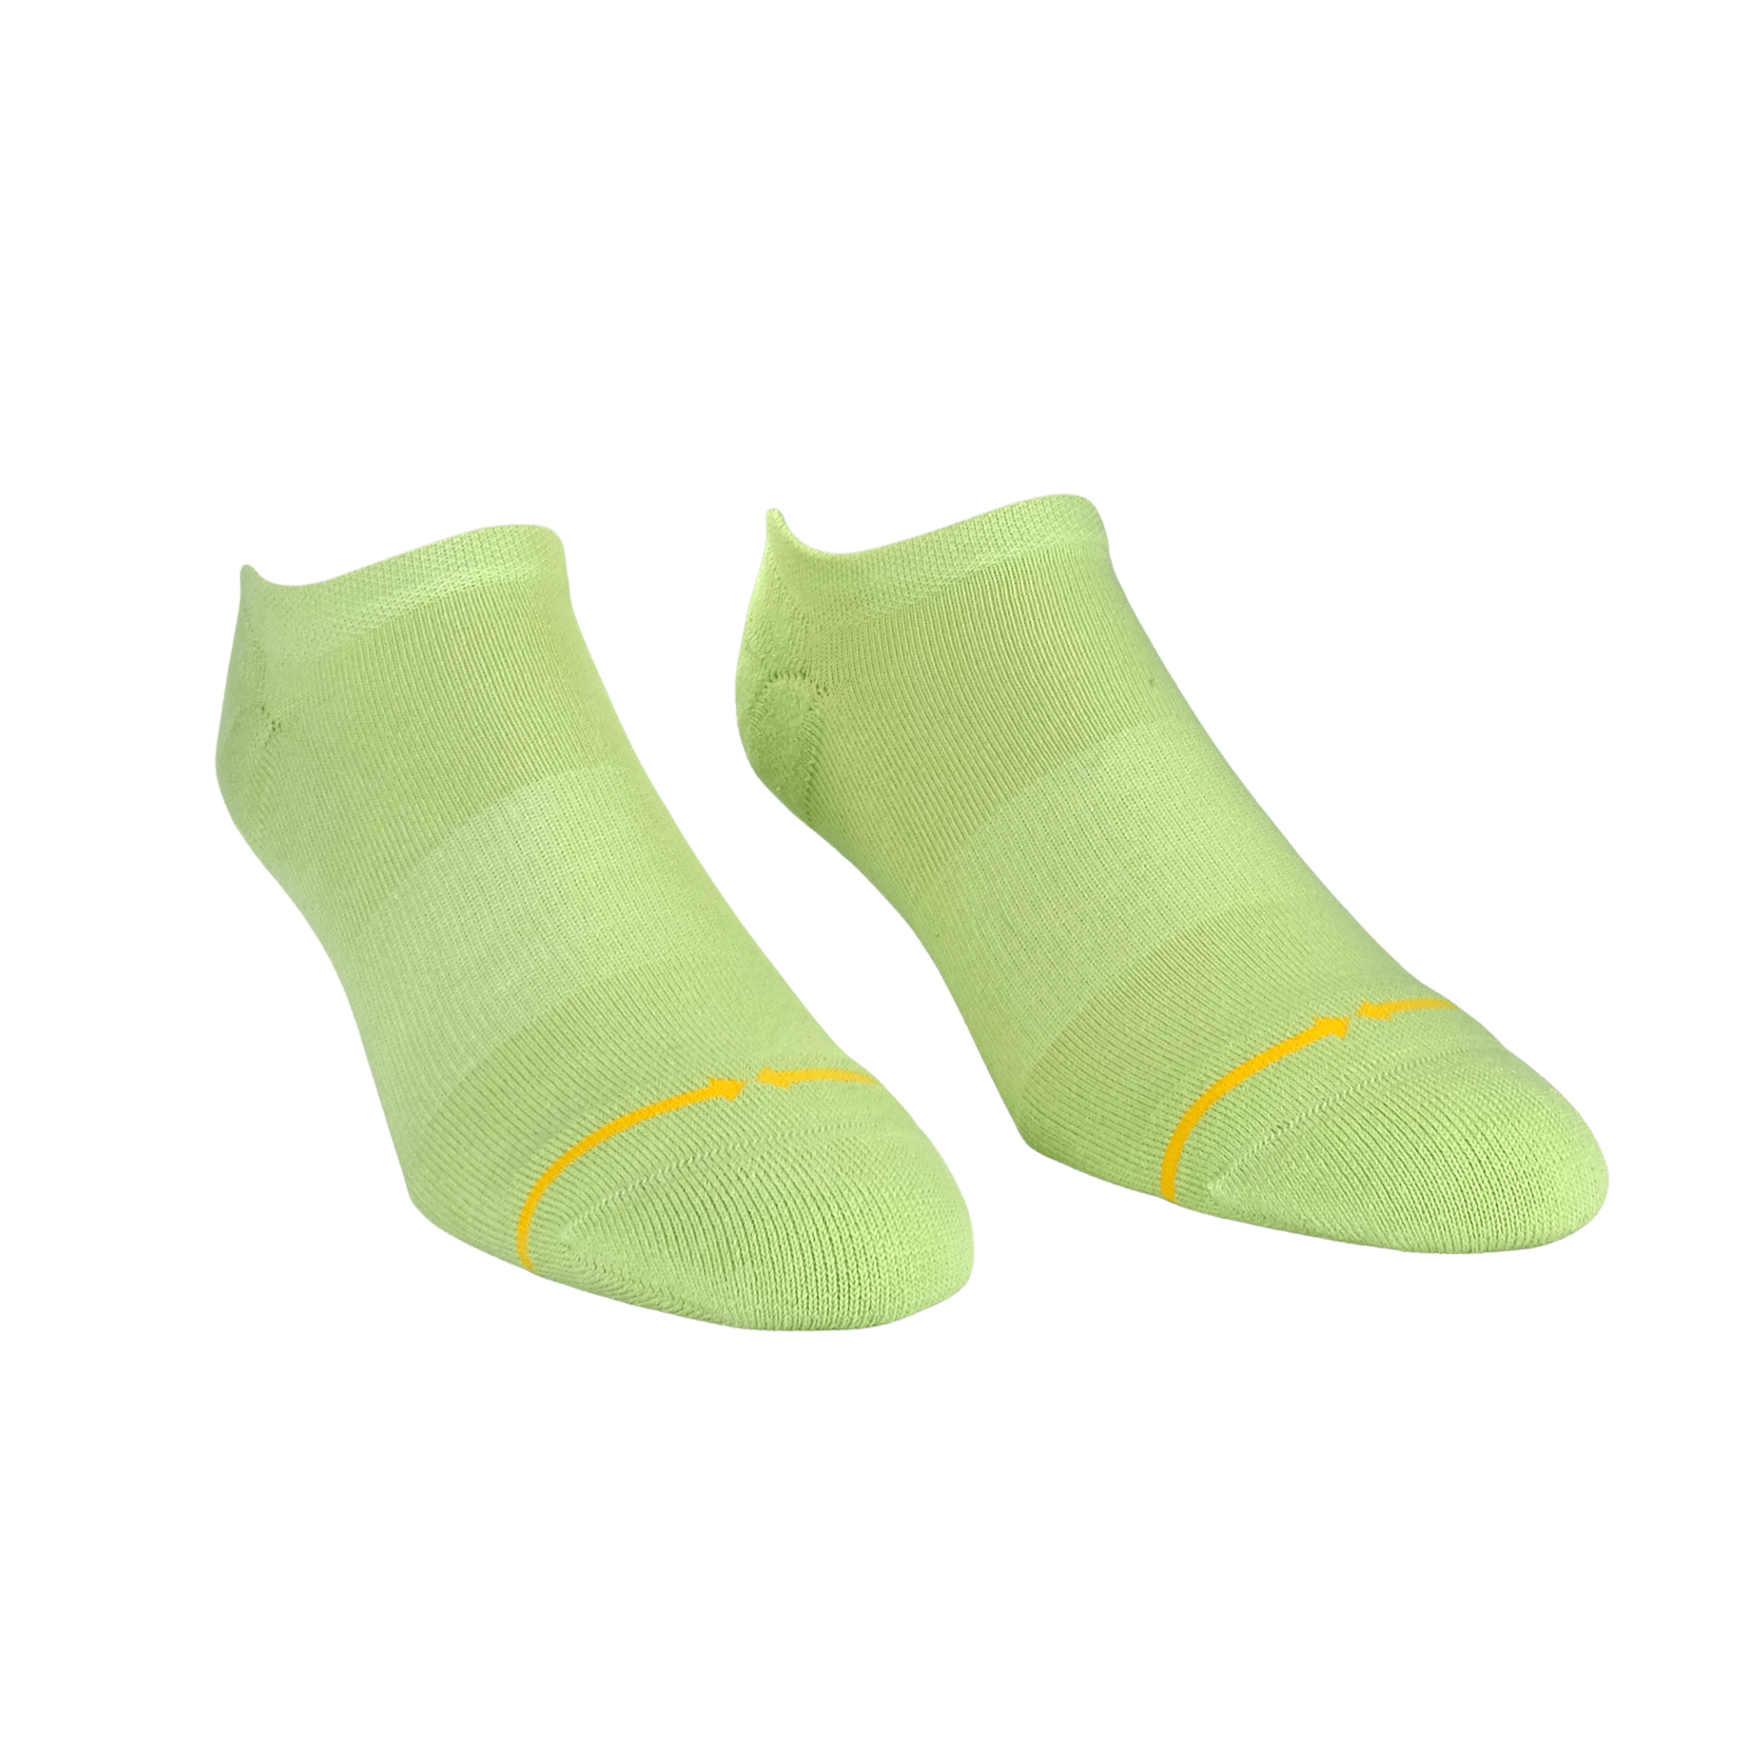 Holiday-Themed Socks | Crew Socks for Everyone | MERGE4